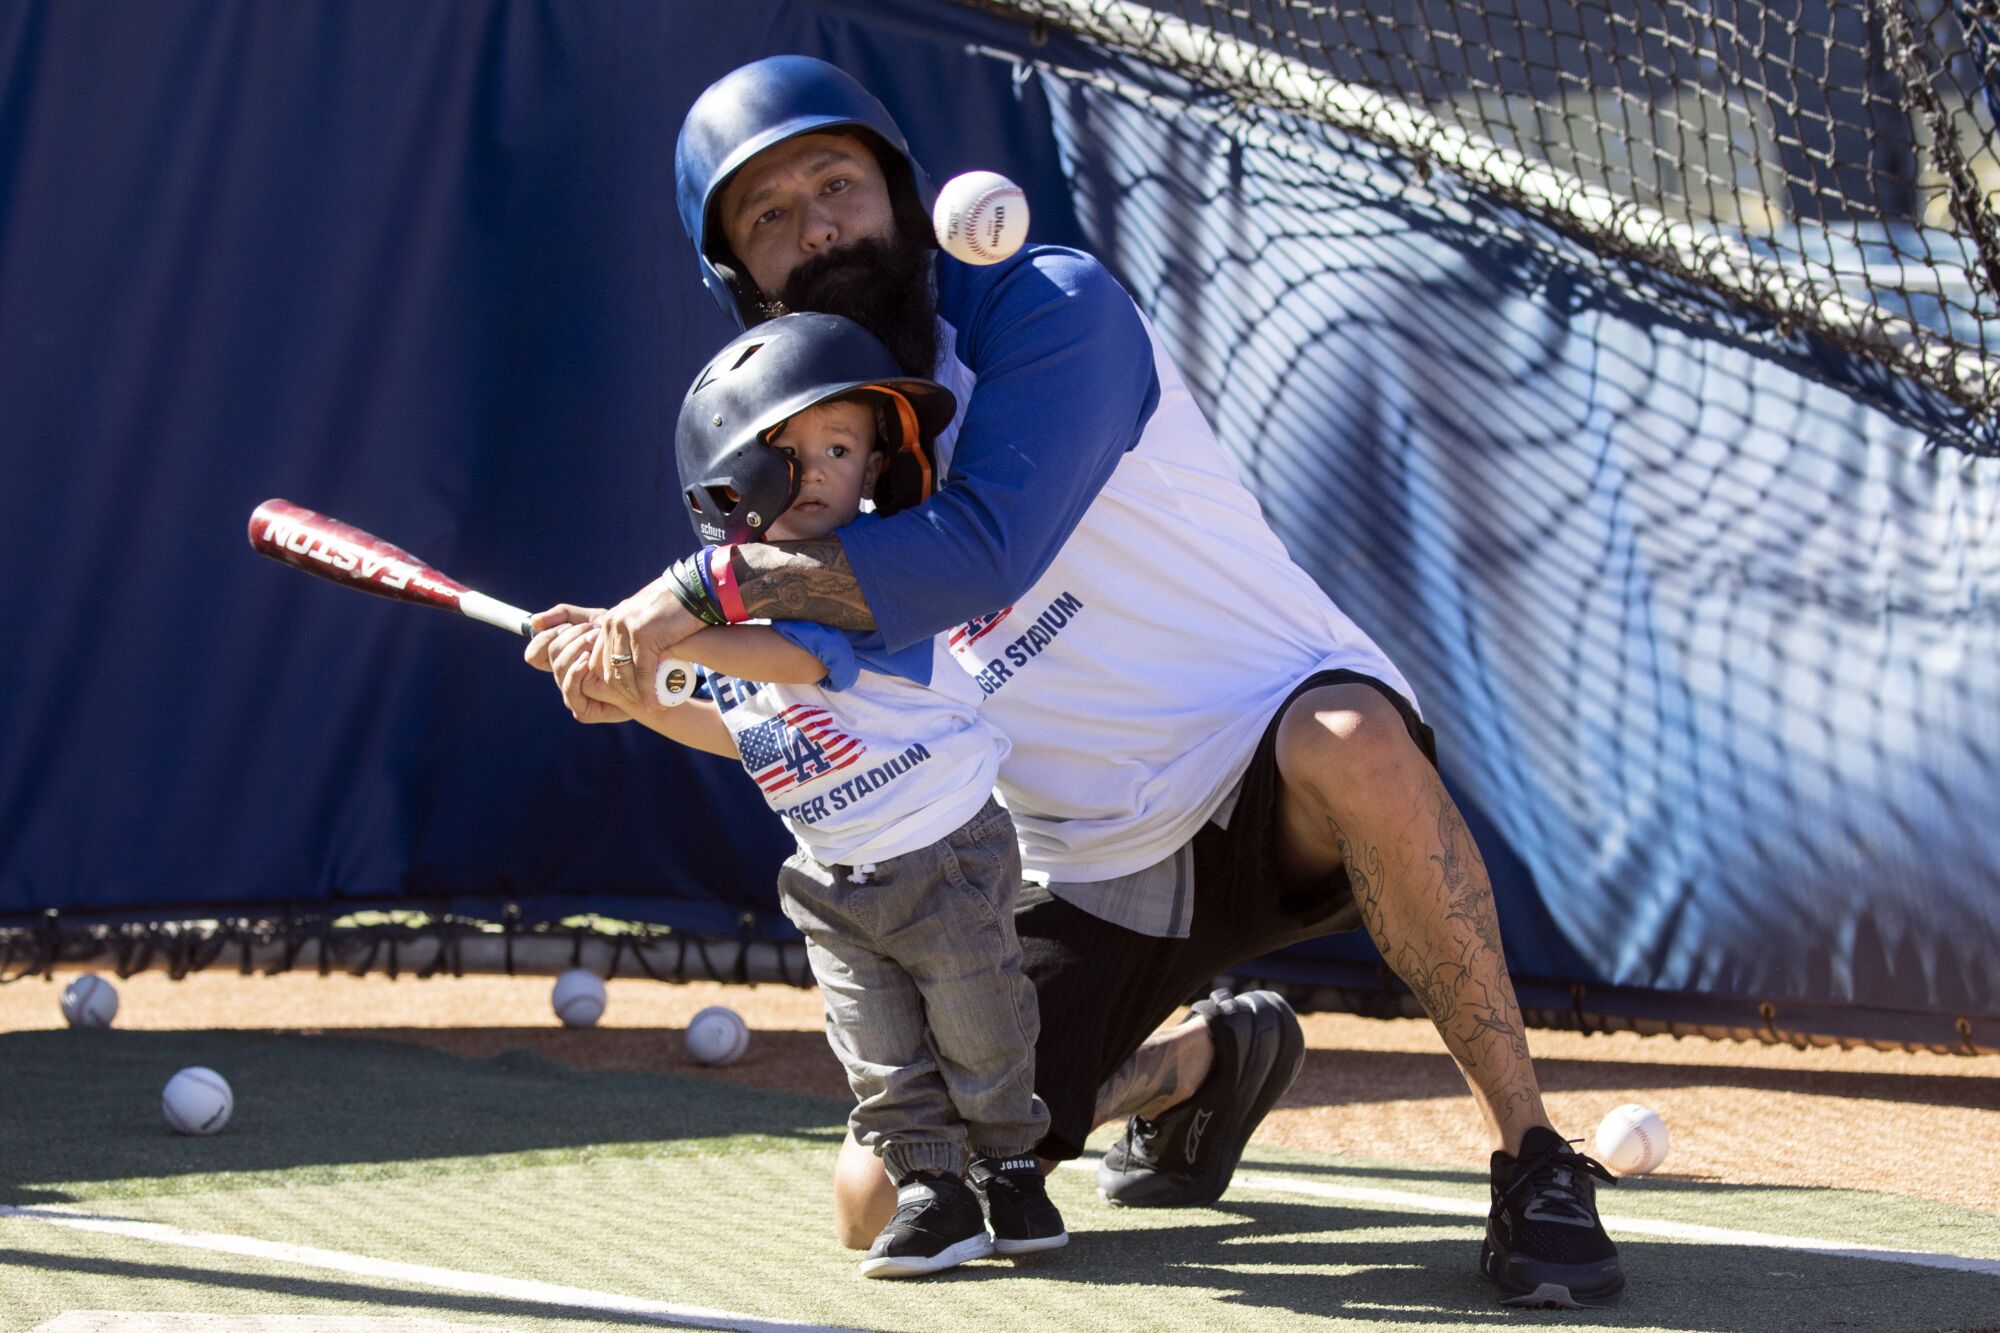 David Moyer, a Marine combat veteran, helps his son Logan, 1, with batting practice